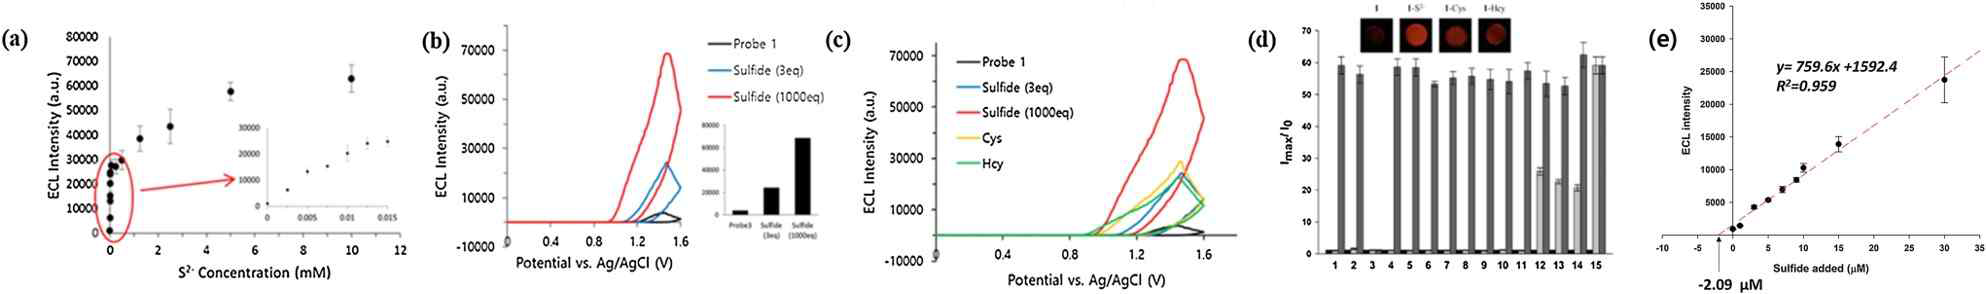 (a) 센서 1의 황화수소 농도에 따른 ECL 세기 변화, (b) 1의 황화수소 30 μM, 10 mM 농도에 따른 ECL 세기 비교, (c) 1의 생체 싸이올들에 대한 ECL 선택성 실험, (d) 1의 다양한 음이온 및 생체 싸이올들에 대한 ECL 선택성 실험(검은색 막대: 1, 밝은 회색 막대: 30 μM 분석 물질, 진한 회색 막대: 10 mM 분석 물질), (e) 인간 혈청에서 수행한 1의 황화수소 농도에 따른 ECL 세기 변화